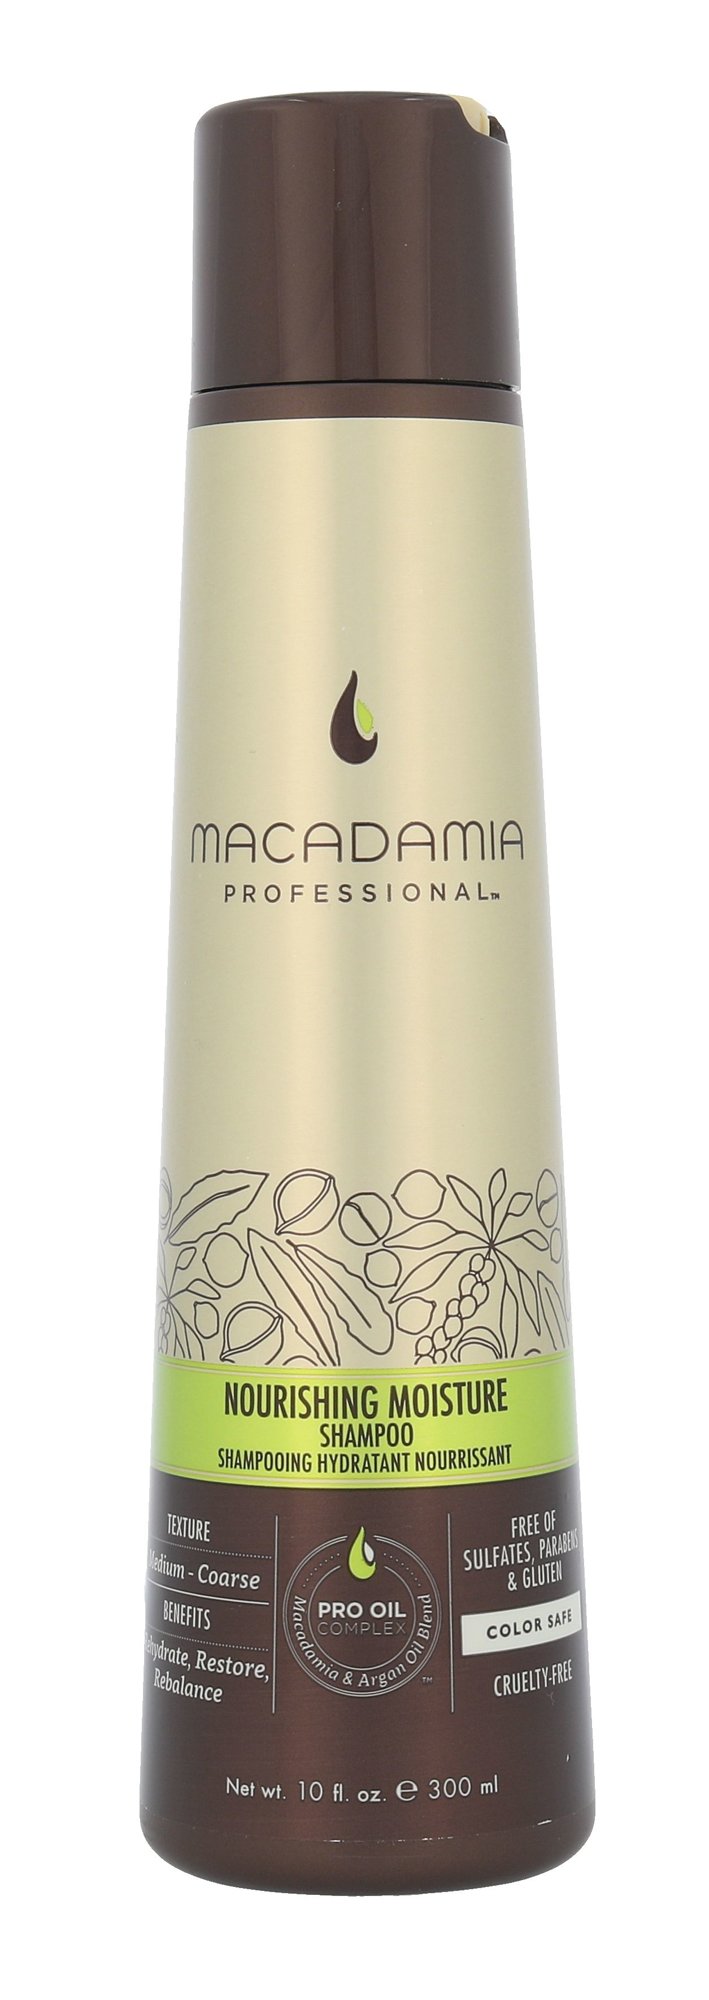 Macadamia Nourishing Moisture Shampoo